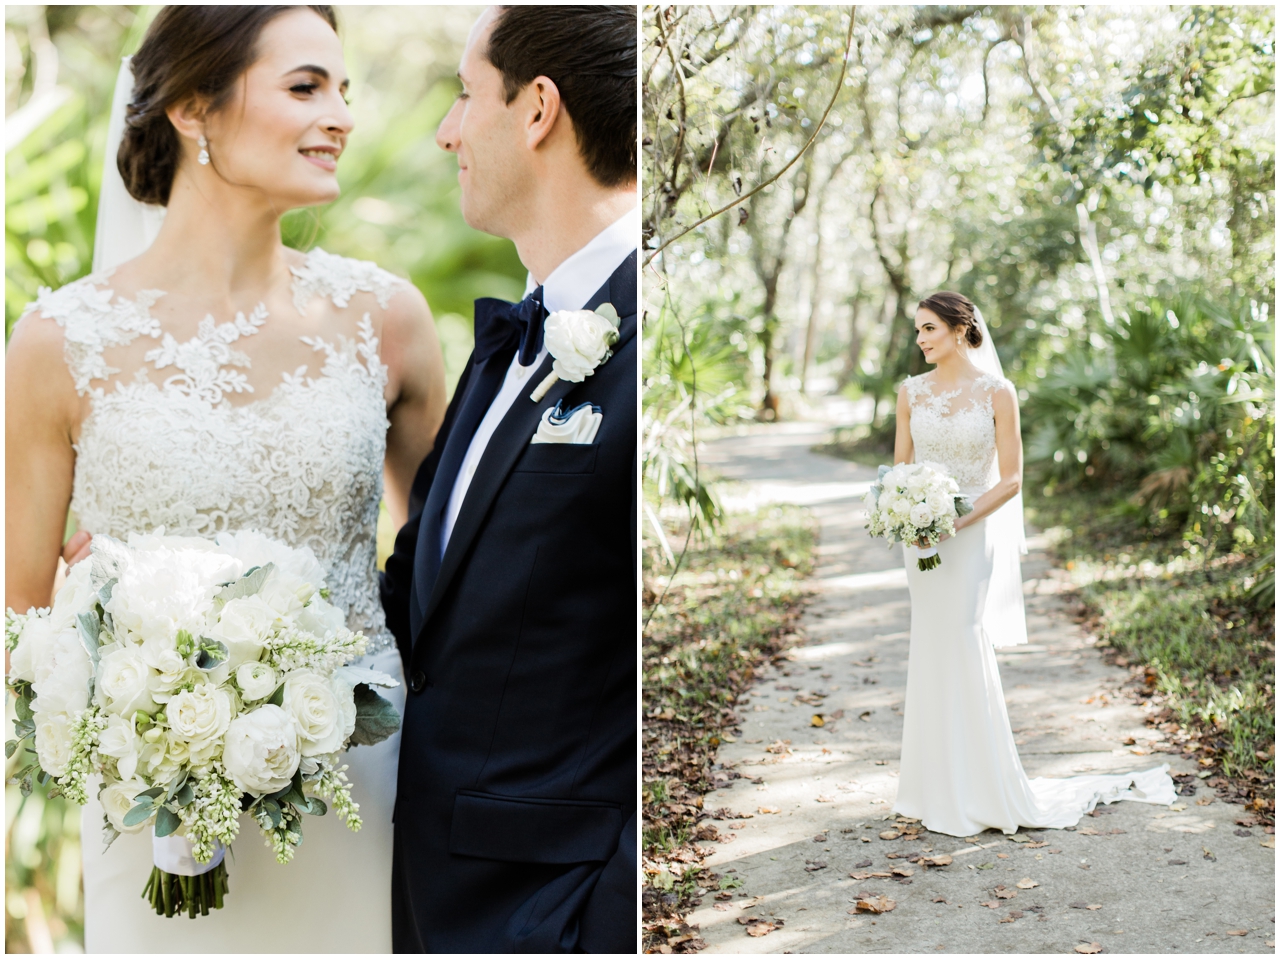 Katie & Chris - Brooke Images | Jacksonville Wedding Photographers | St. Augustine ...1280 x 959